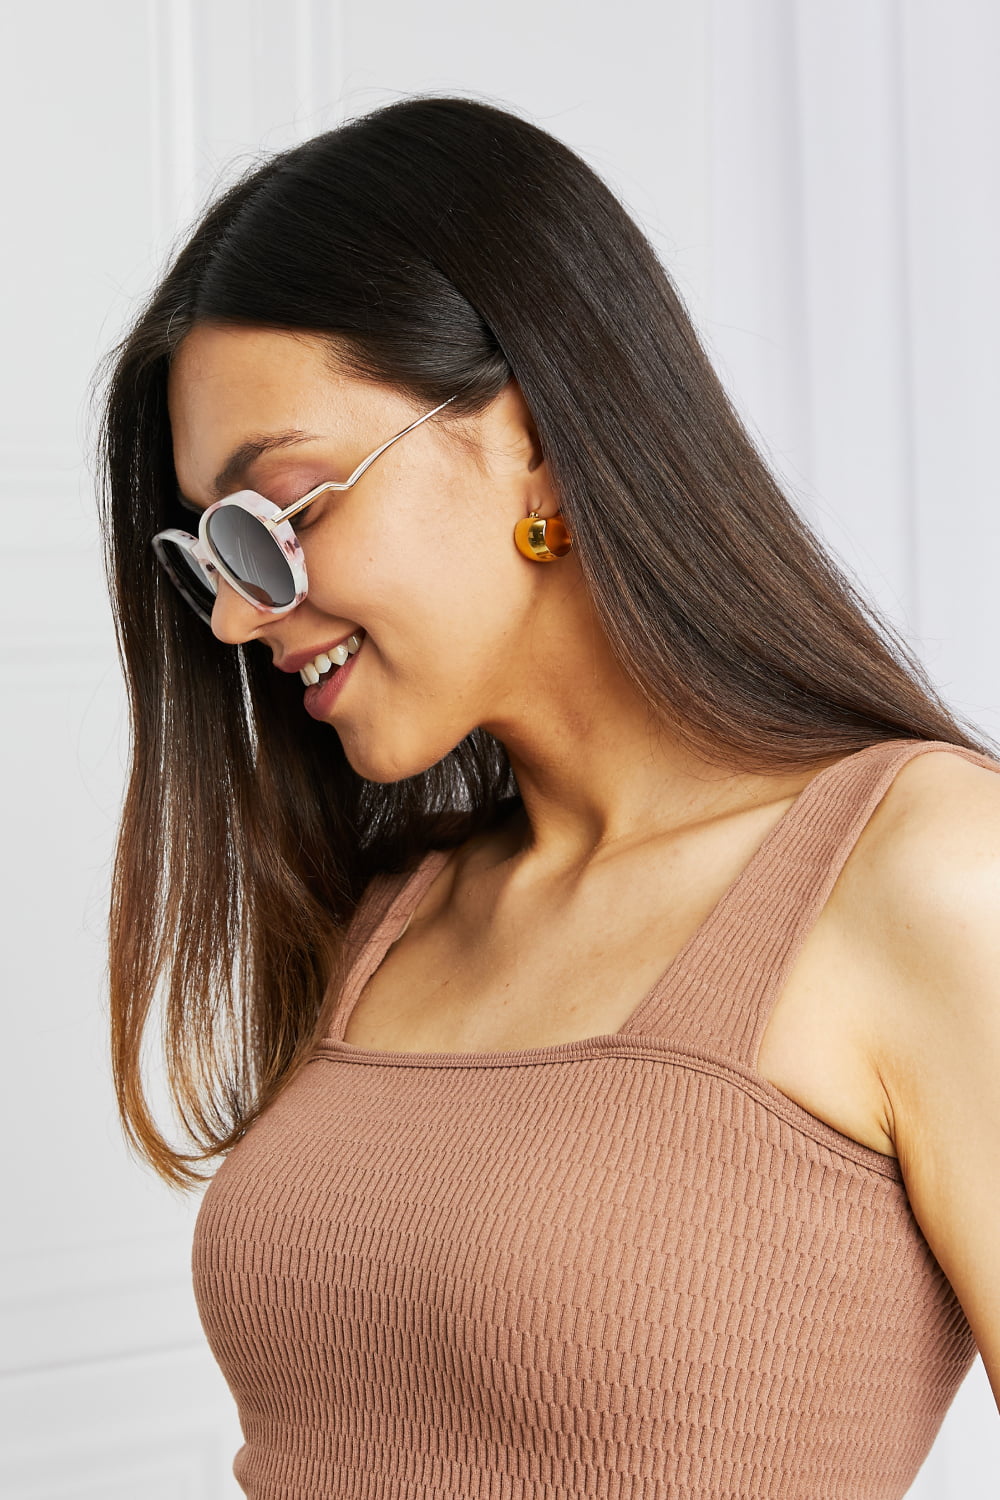 Glam TAC Polarization Lens Sunglasses - BEAUTY COSMOTICS SHOP